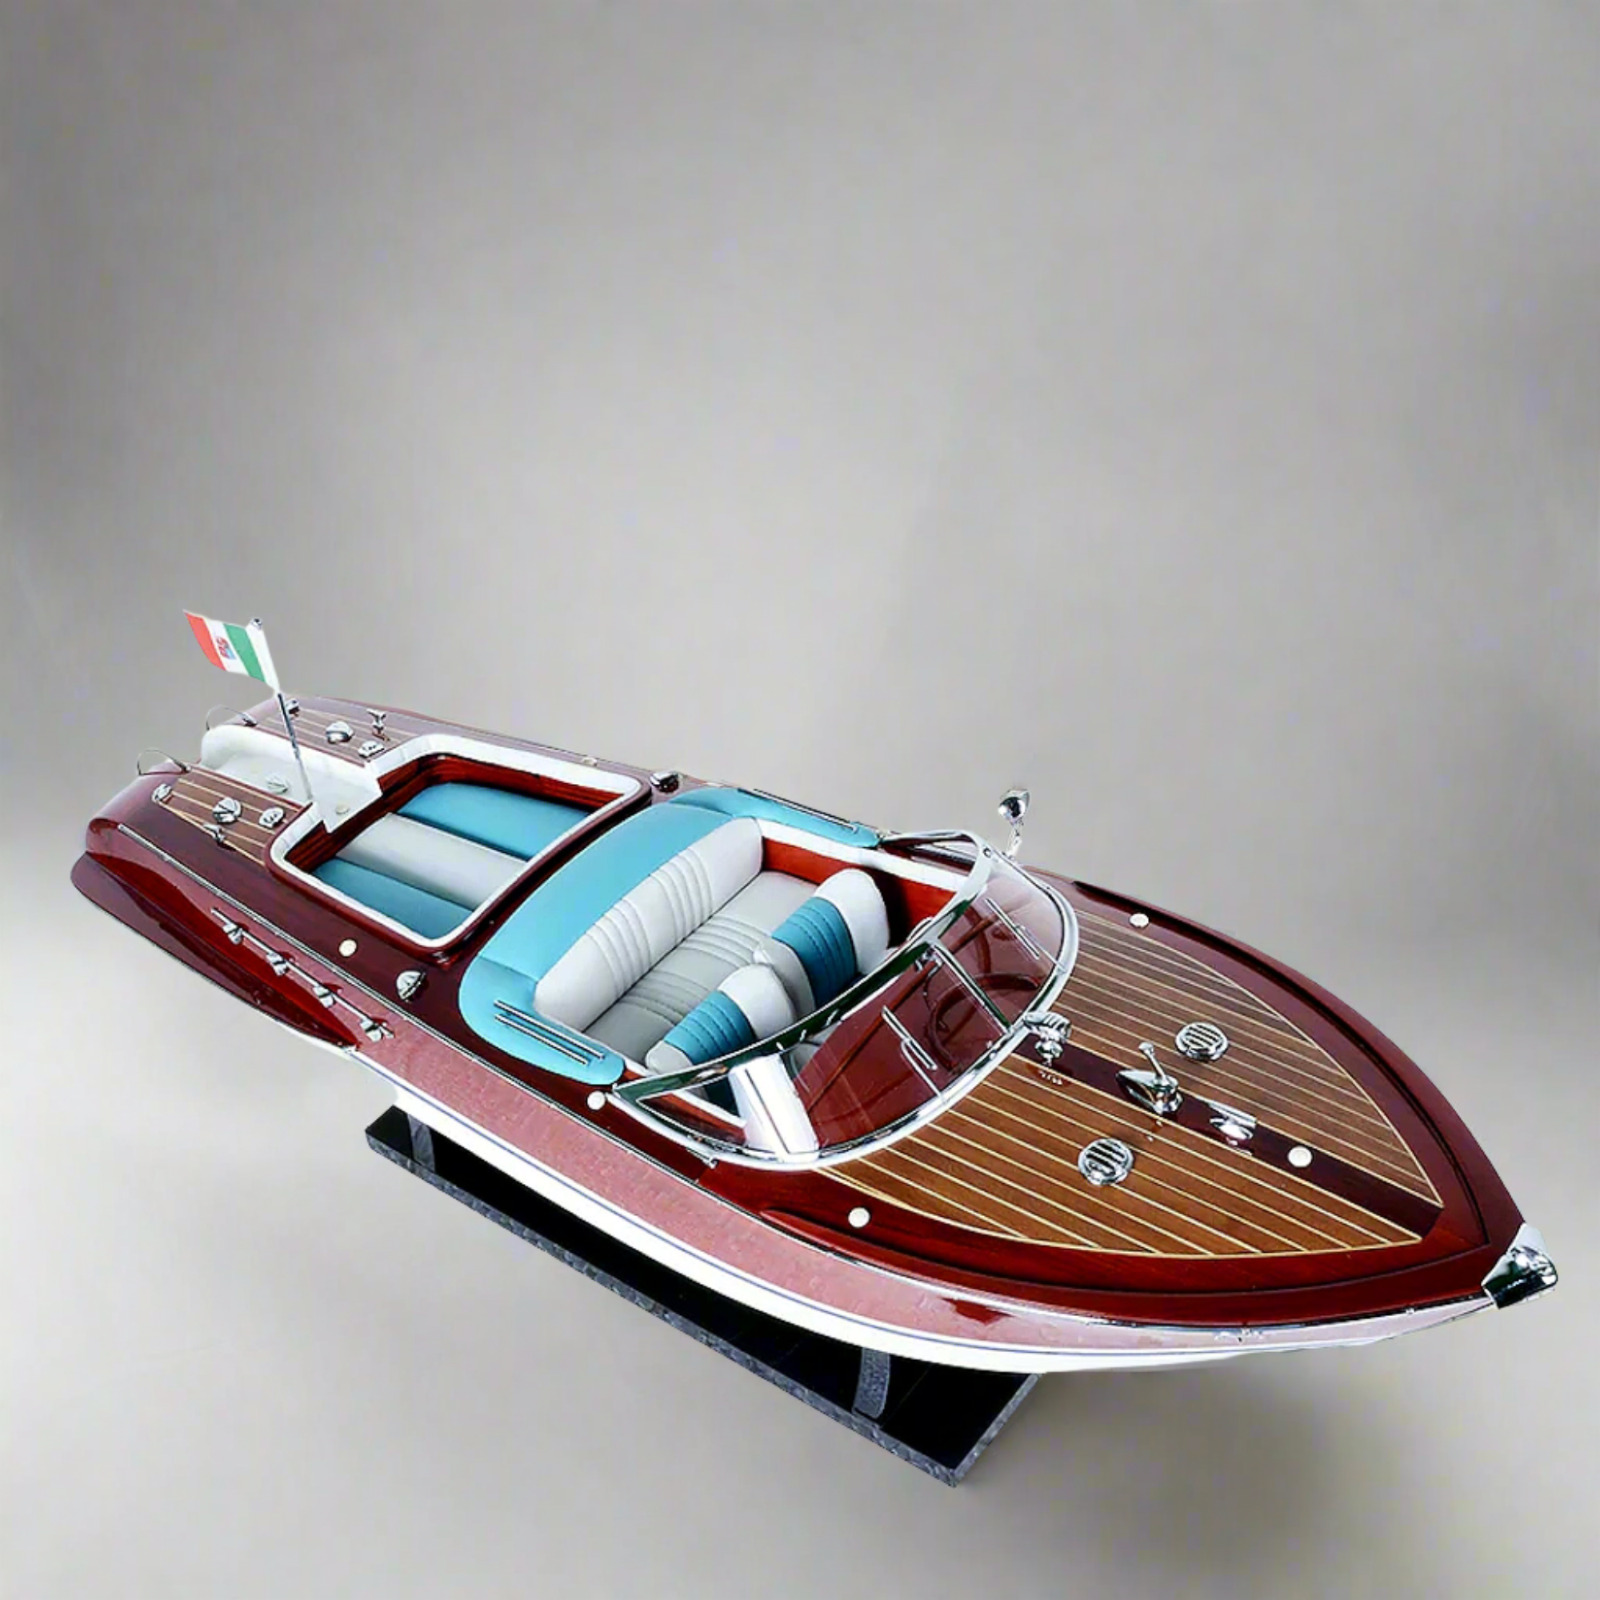 Handcrafted Riva Aquarama Model Boat - Fully Assembled Mahogany Speedboat - 26.5